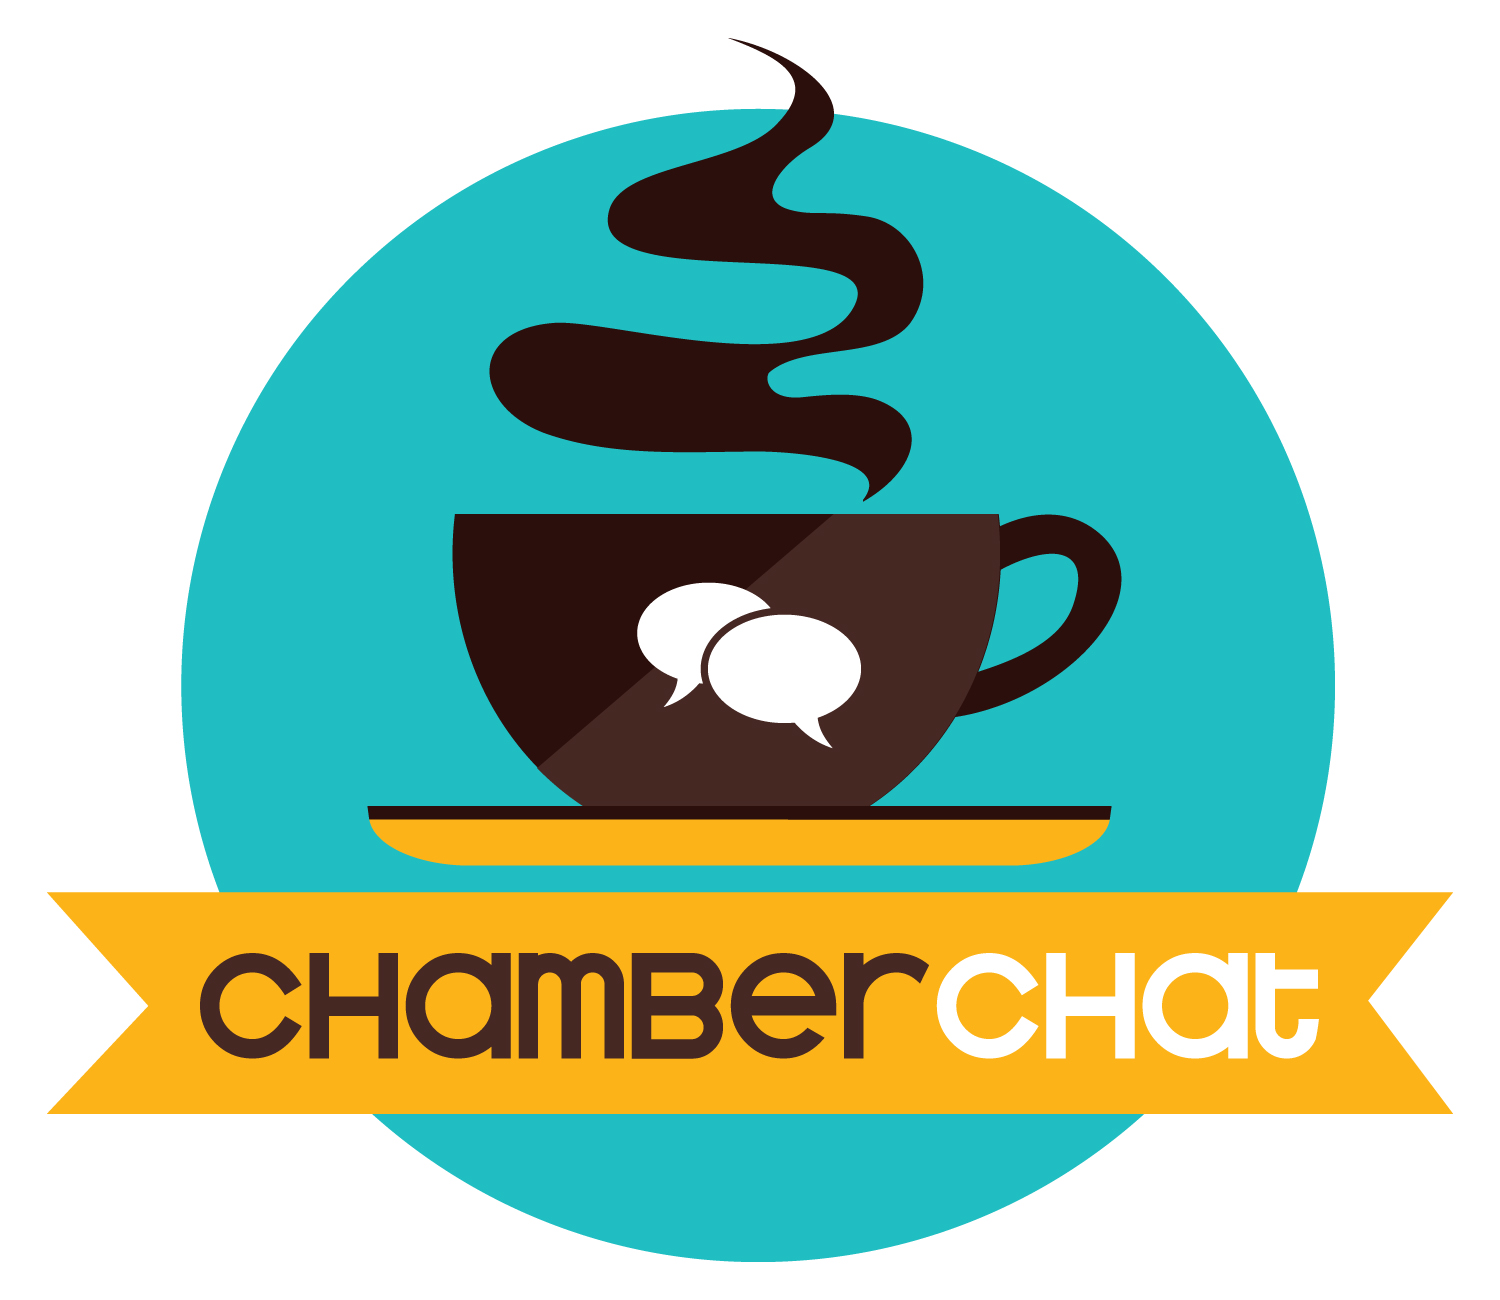 Chamber Chat – The Bagel Inn